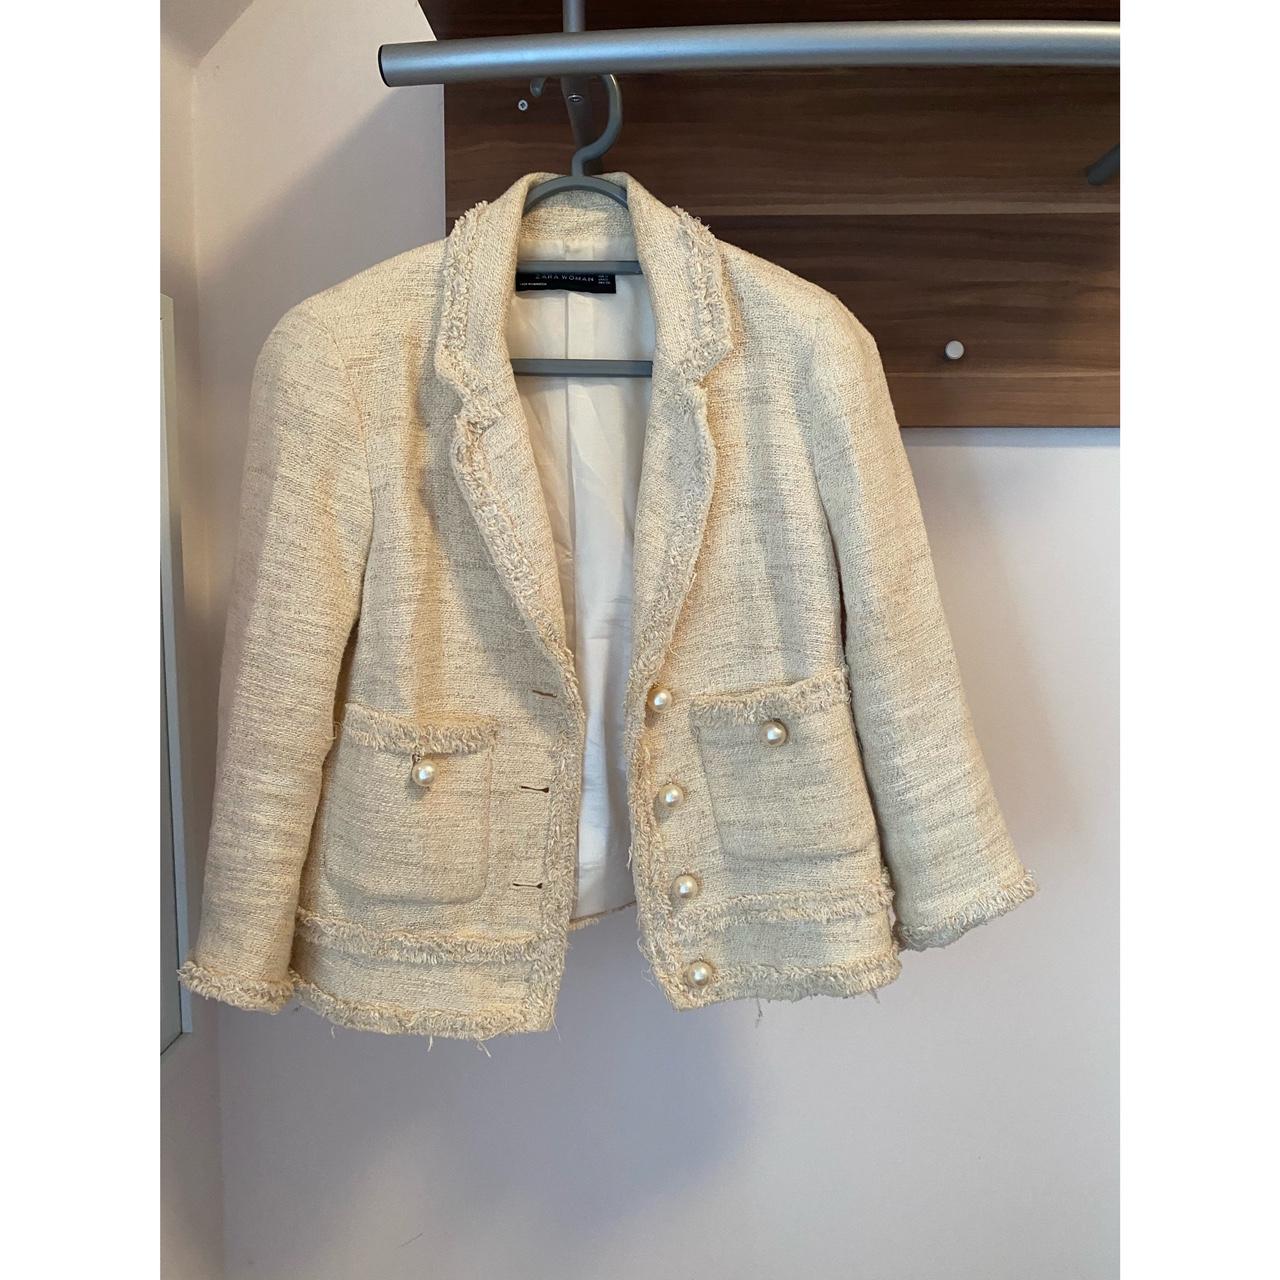 Zara Chanel style cream jacket , #zara, #chanel, #tweed